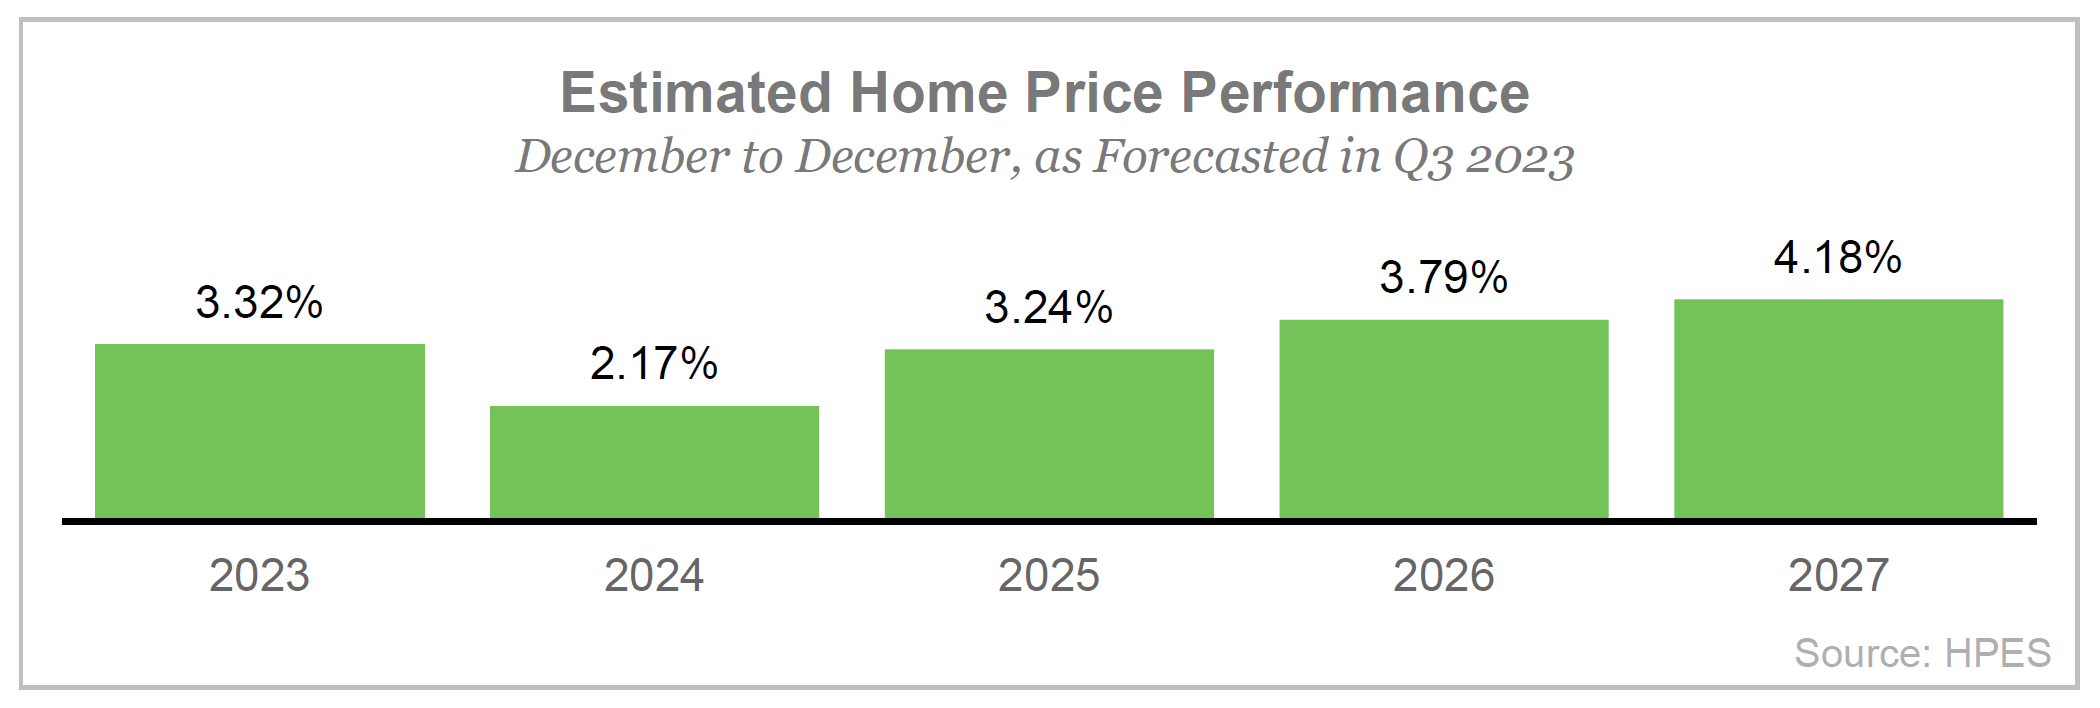 Estimated Home Price Performance